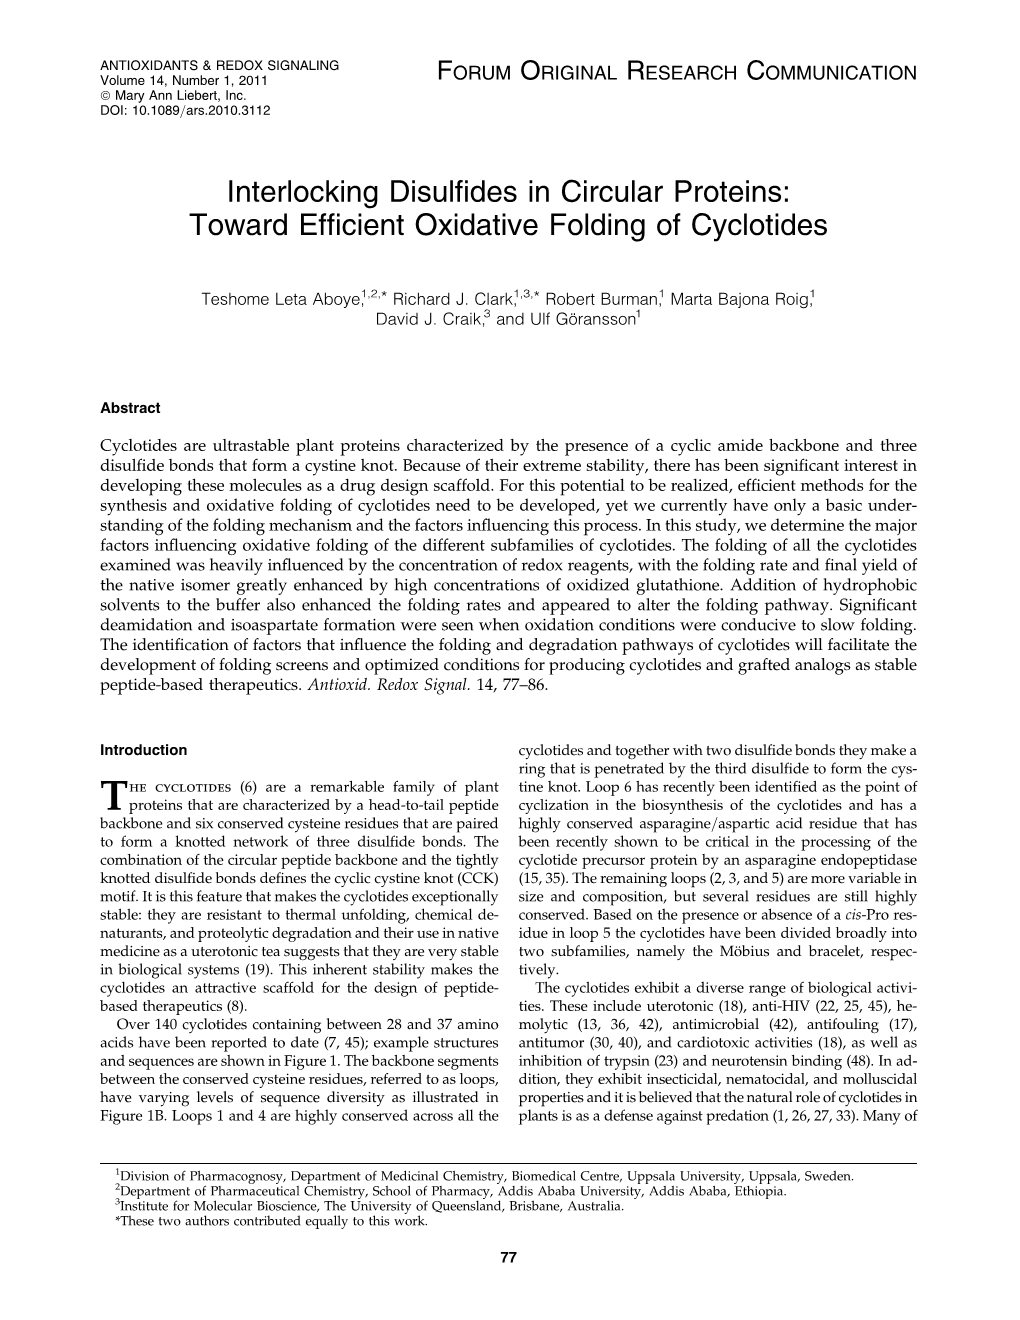 Toward Efficient Oxidative Folding of Cyclotides